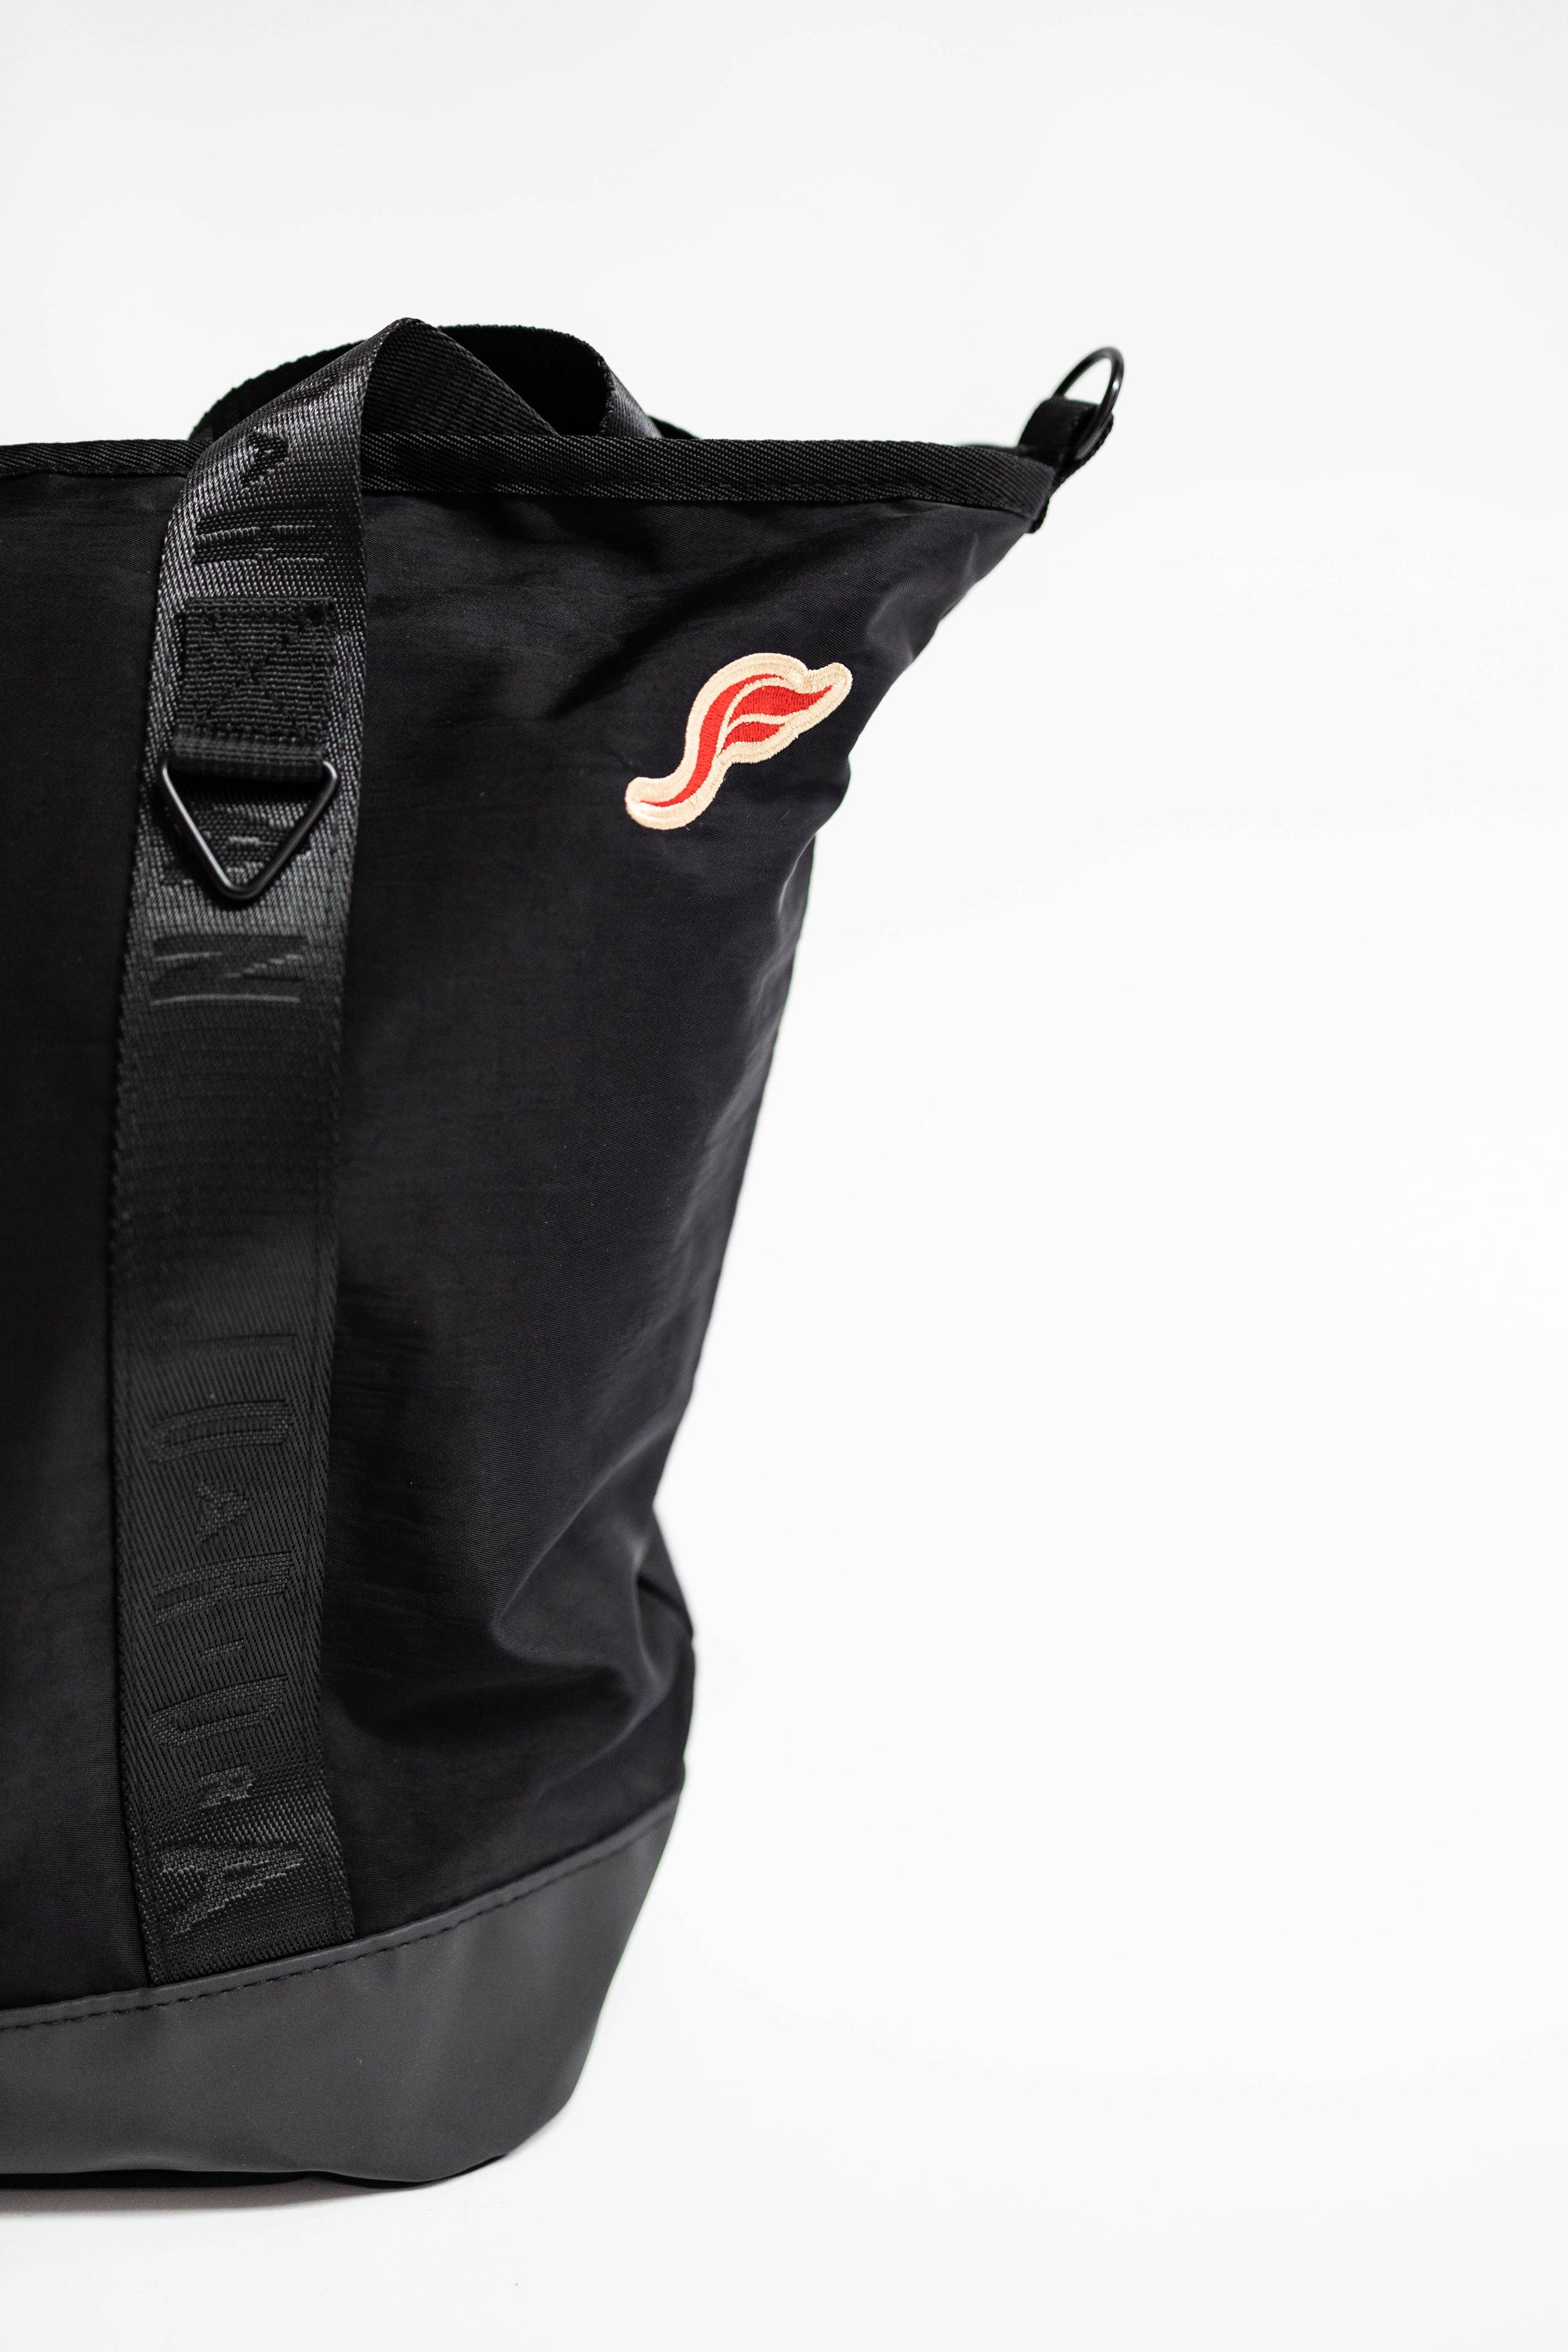  Nike Tote Bag